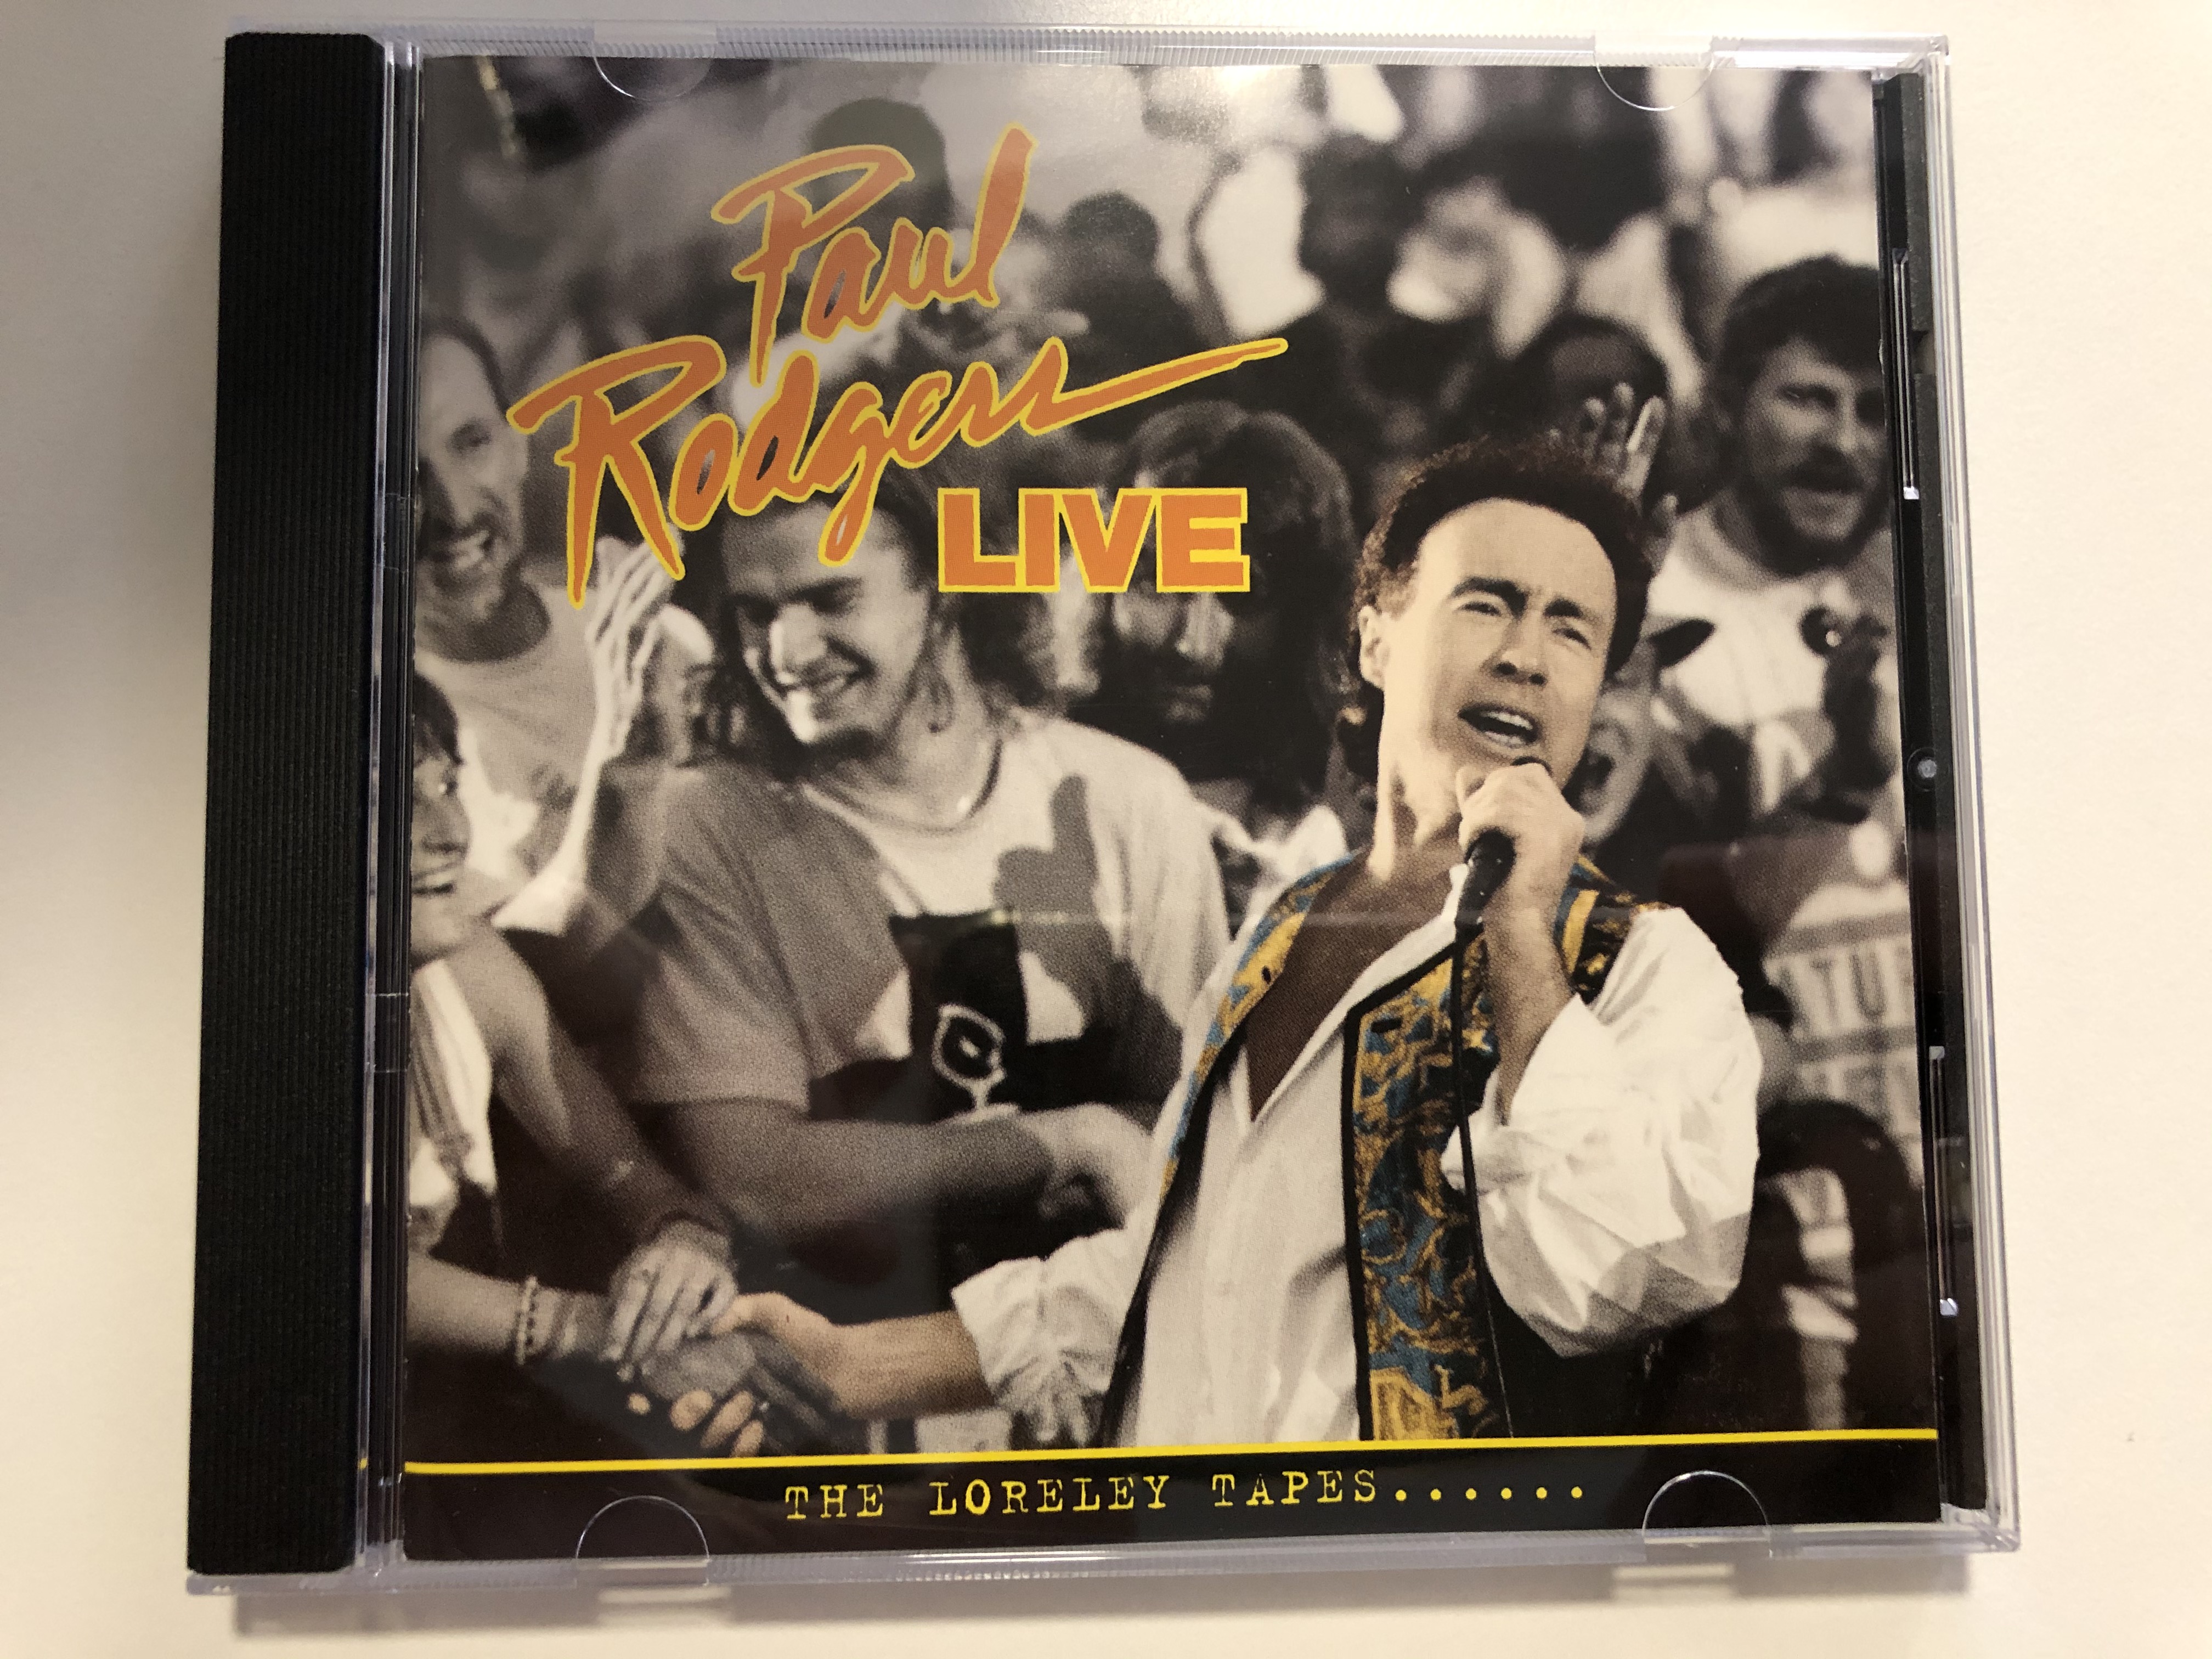 paul-rodgers-live-the-loreley-tapes...-spv-recordings-audio-cd-1997-spv-176-44672-cd-1-.jpg